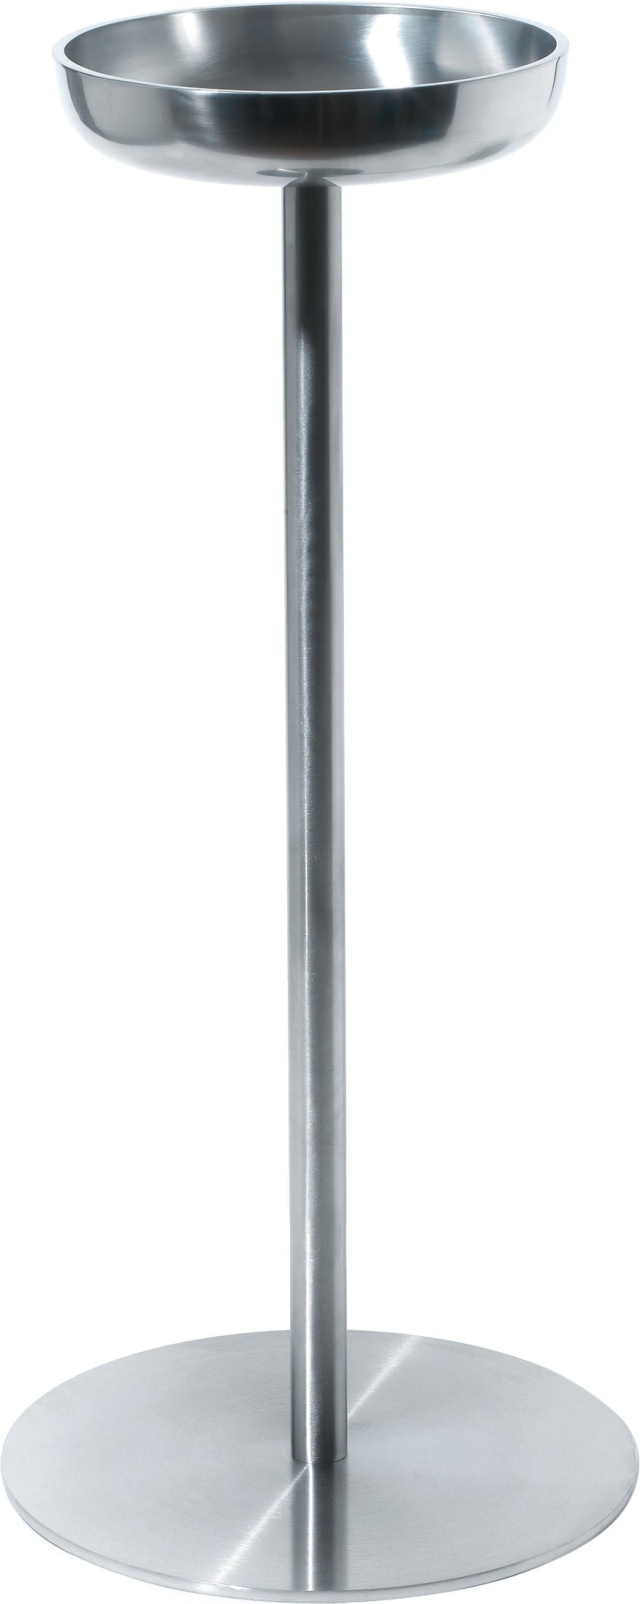 Stativ for vinkjøler, Diameter 28 cm - Alessi